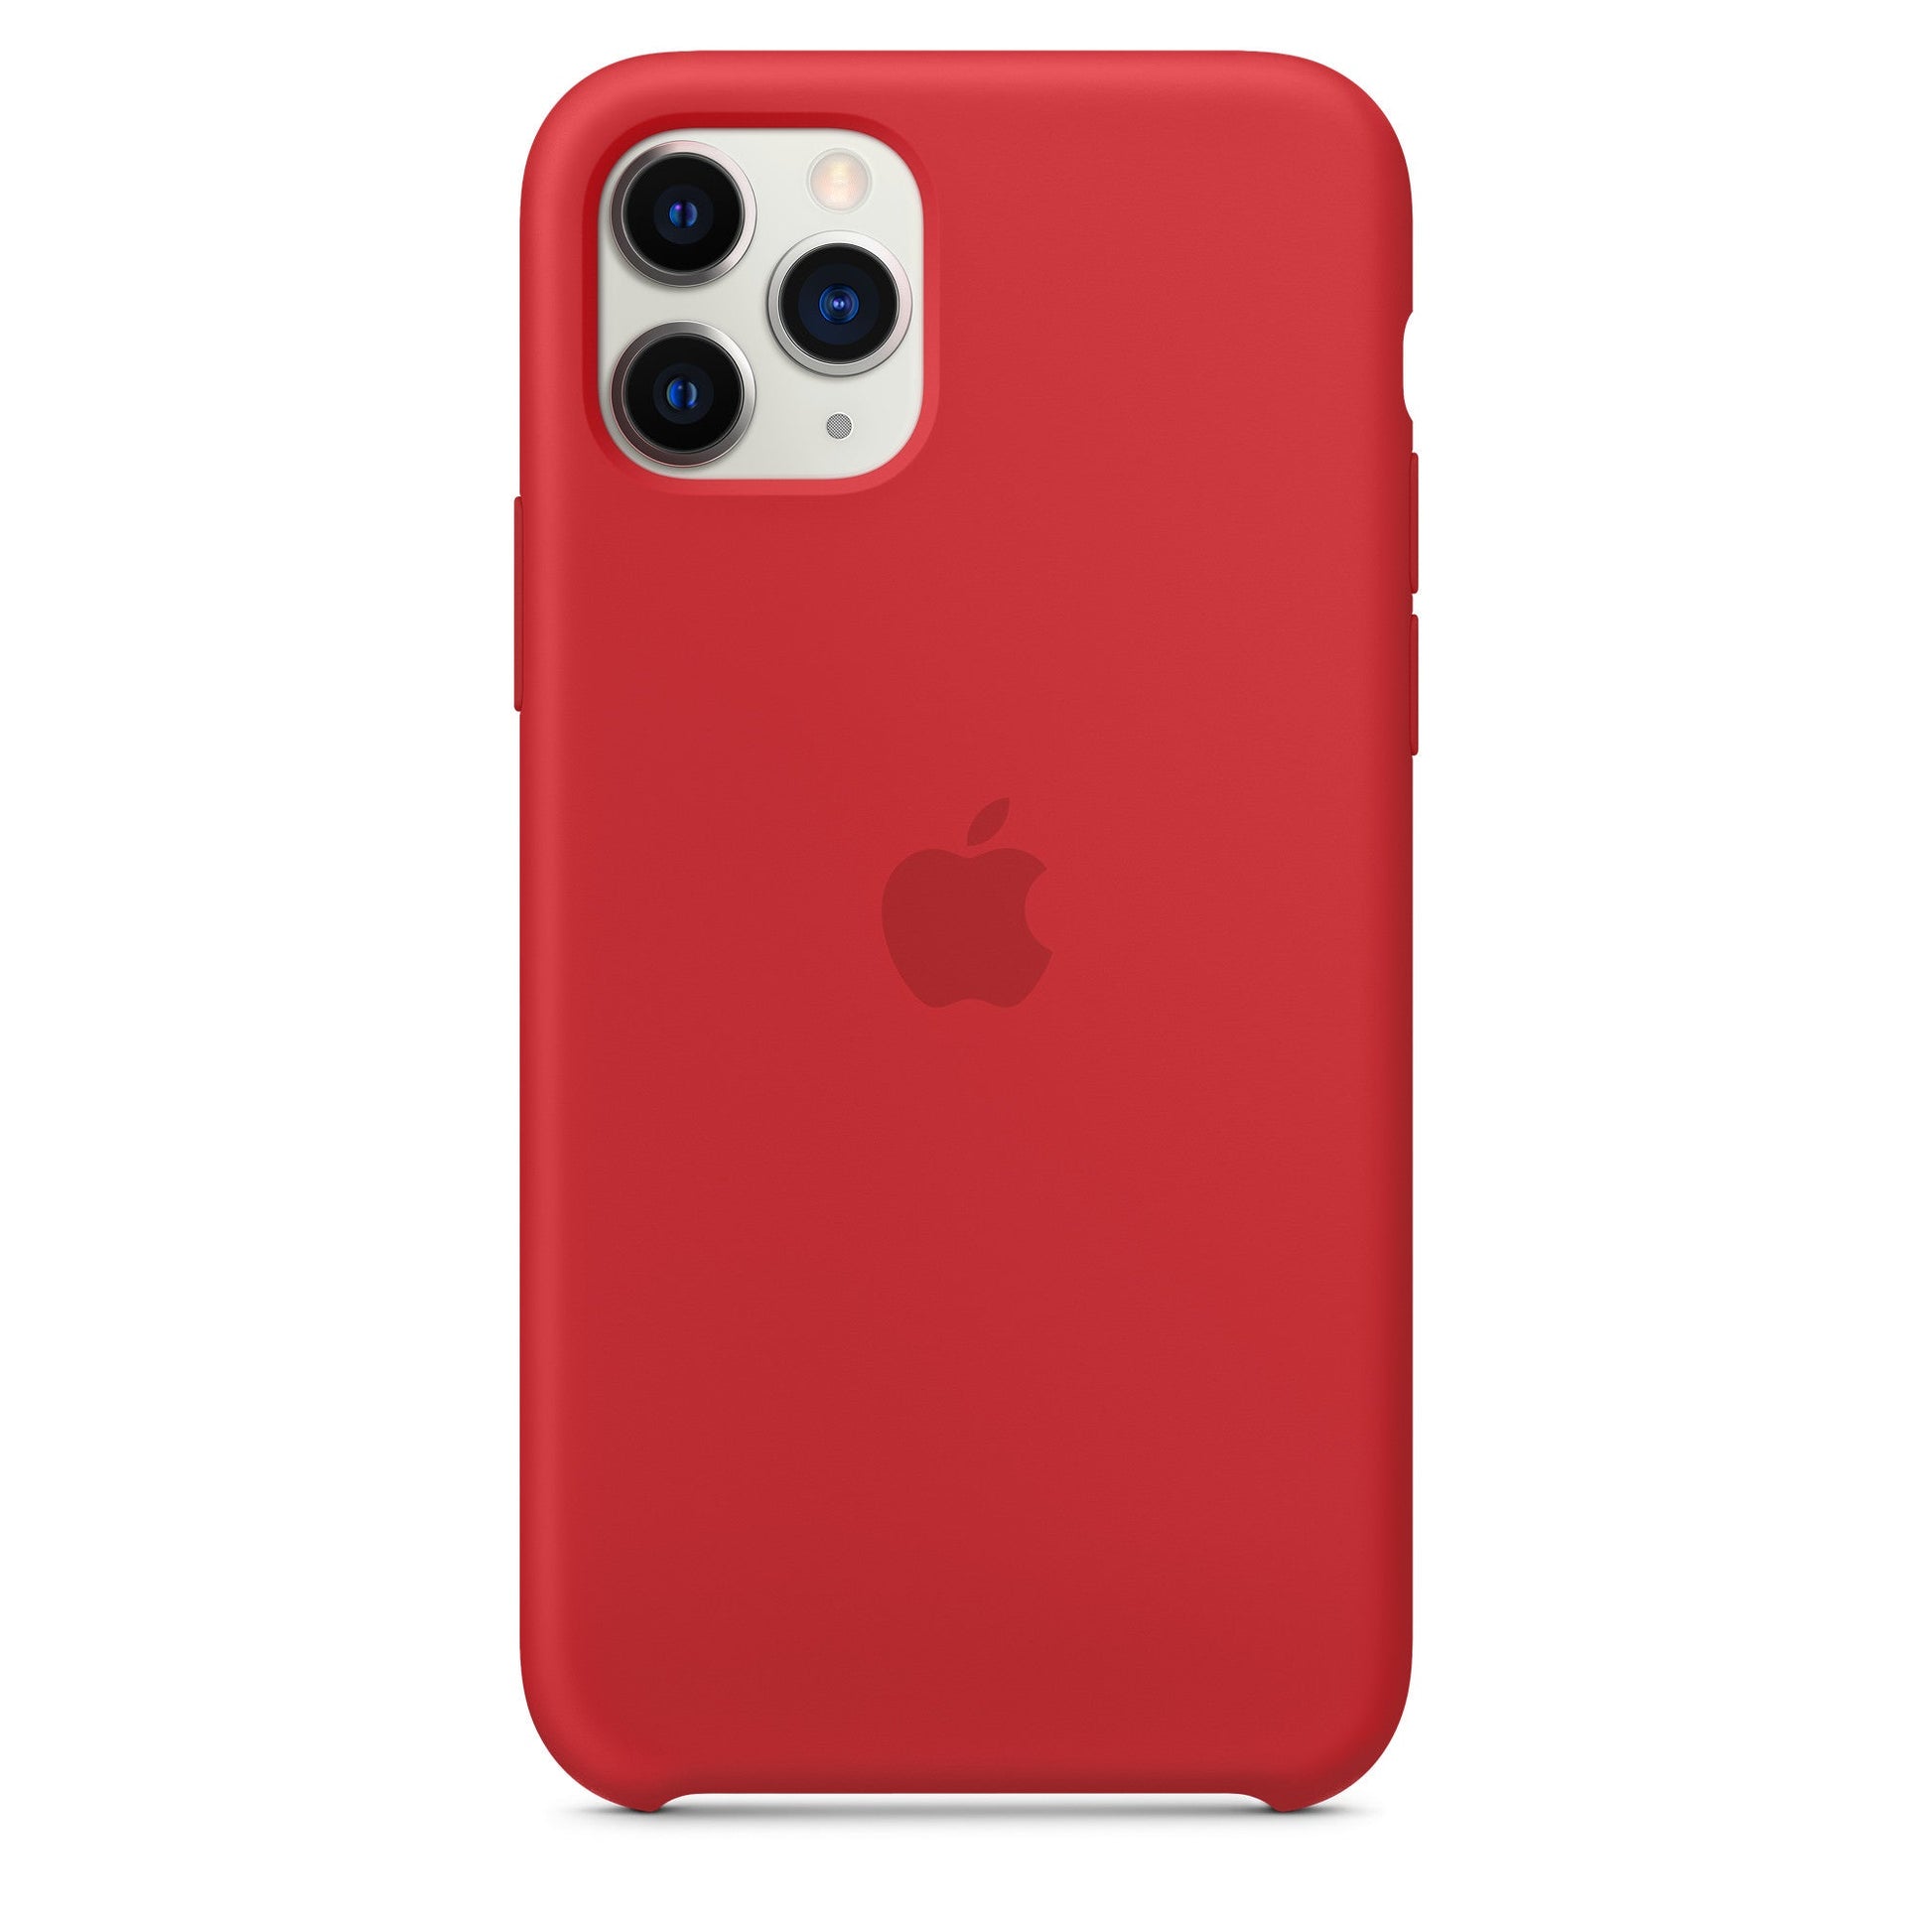 Husa Silicon Apple pt. iPhone 11 Pro Red - MWYH2ZM/A Originala Resigilat - 190199287778 - 2